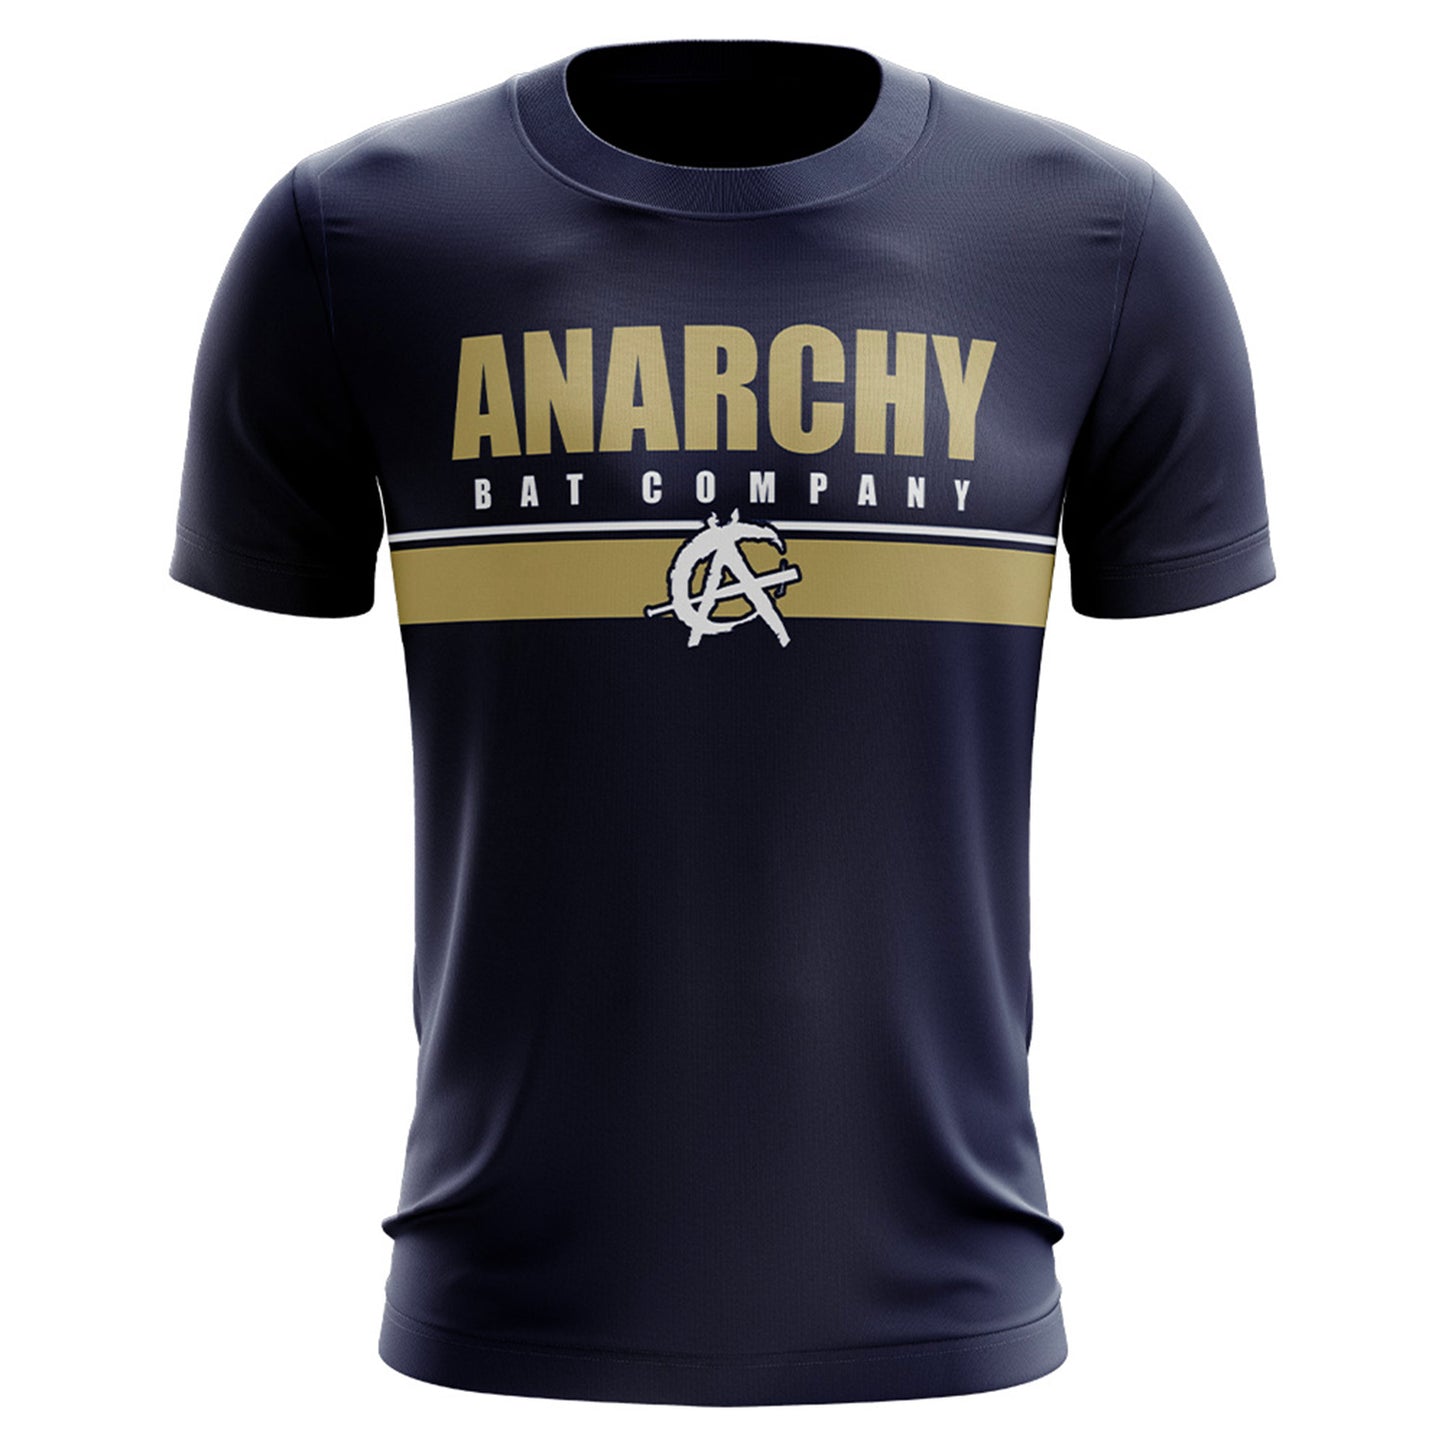 Anarchy Bat Company Short Sleeve Shirt - Retro (Navy/Vegas Gold/White)